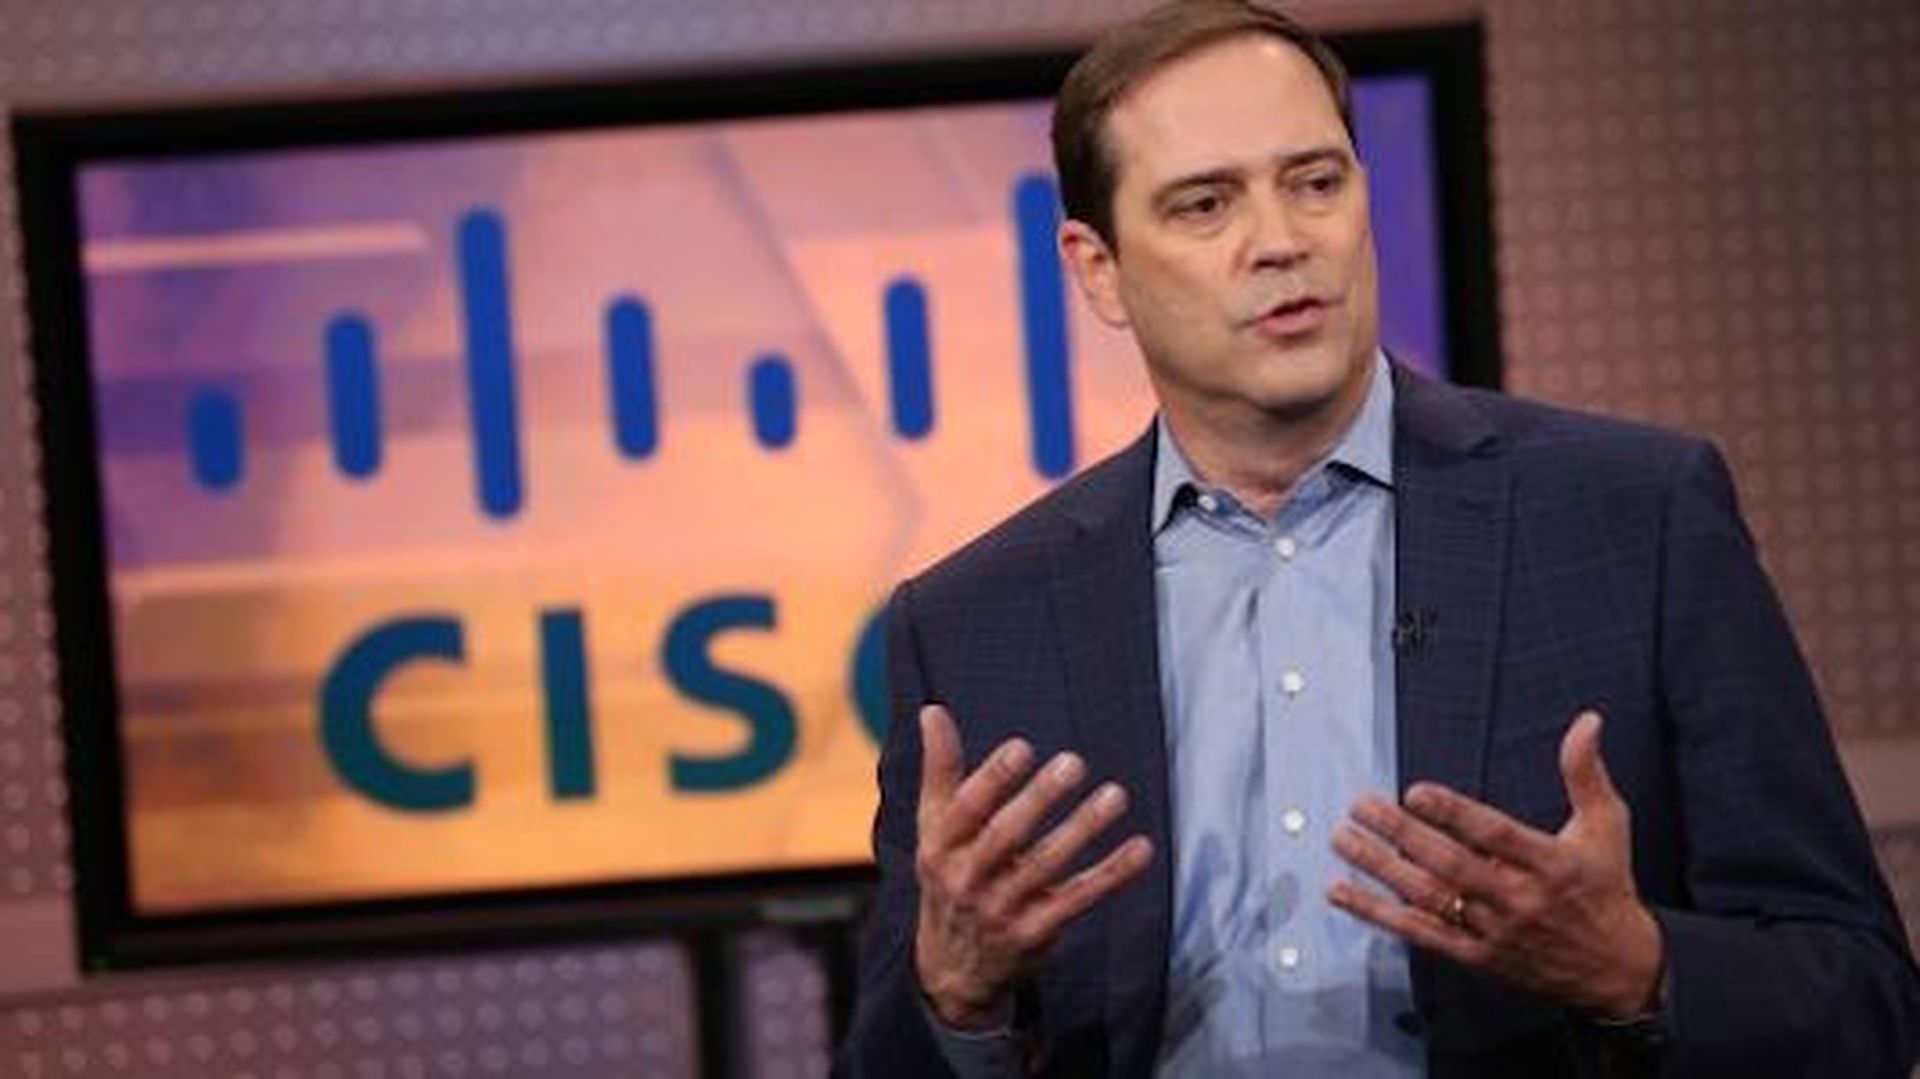 Cisco Systems CEO Chuck Robbins